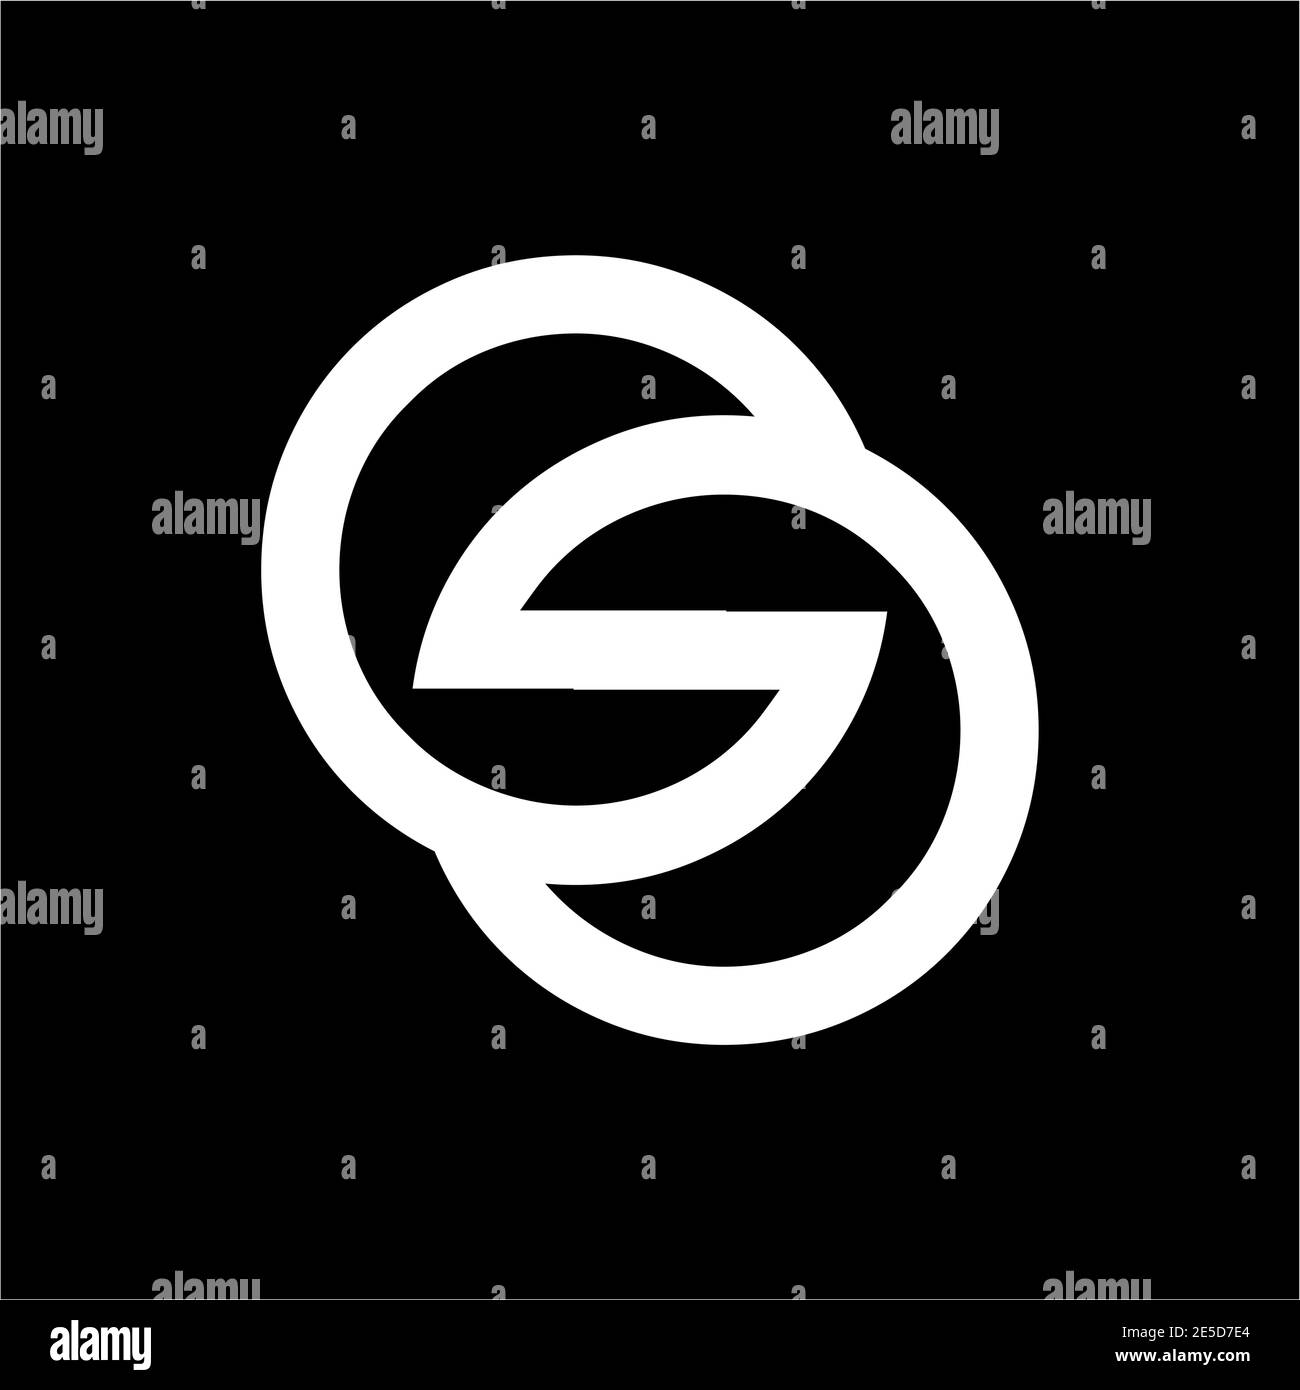 S, GSG, CSC initials geometric logo Stock Vector